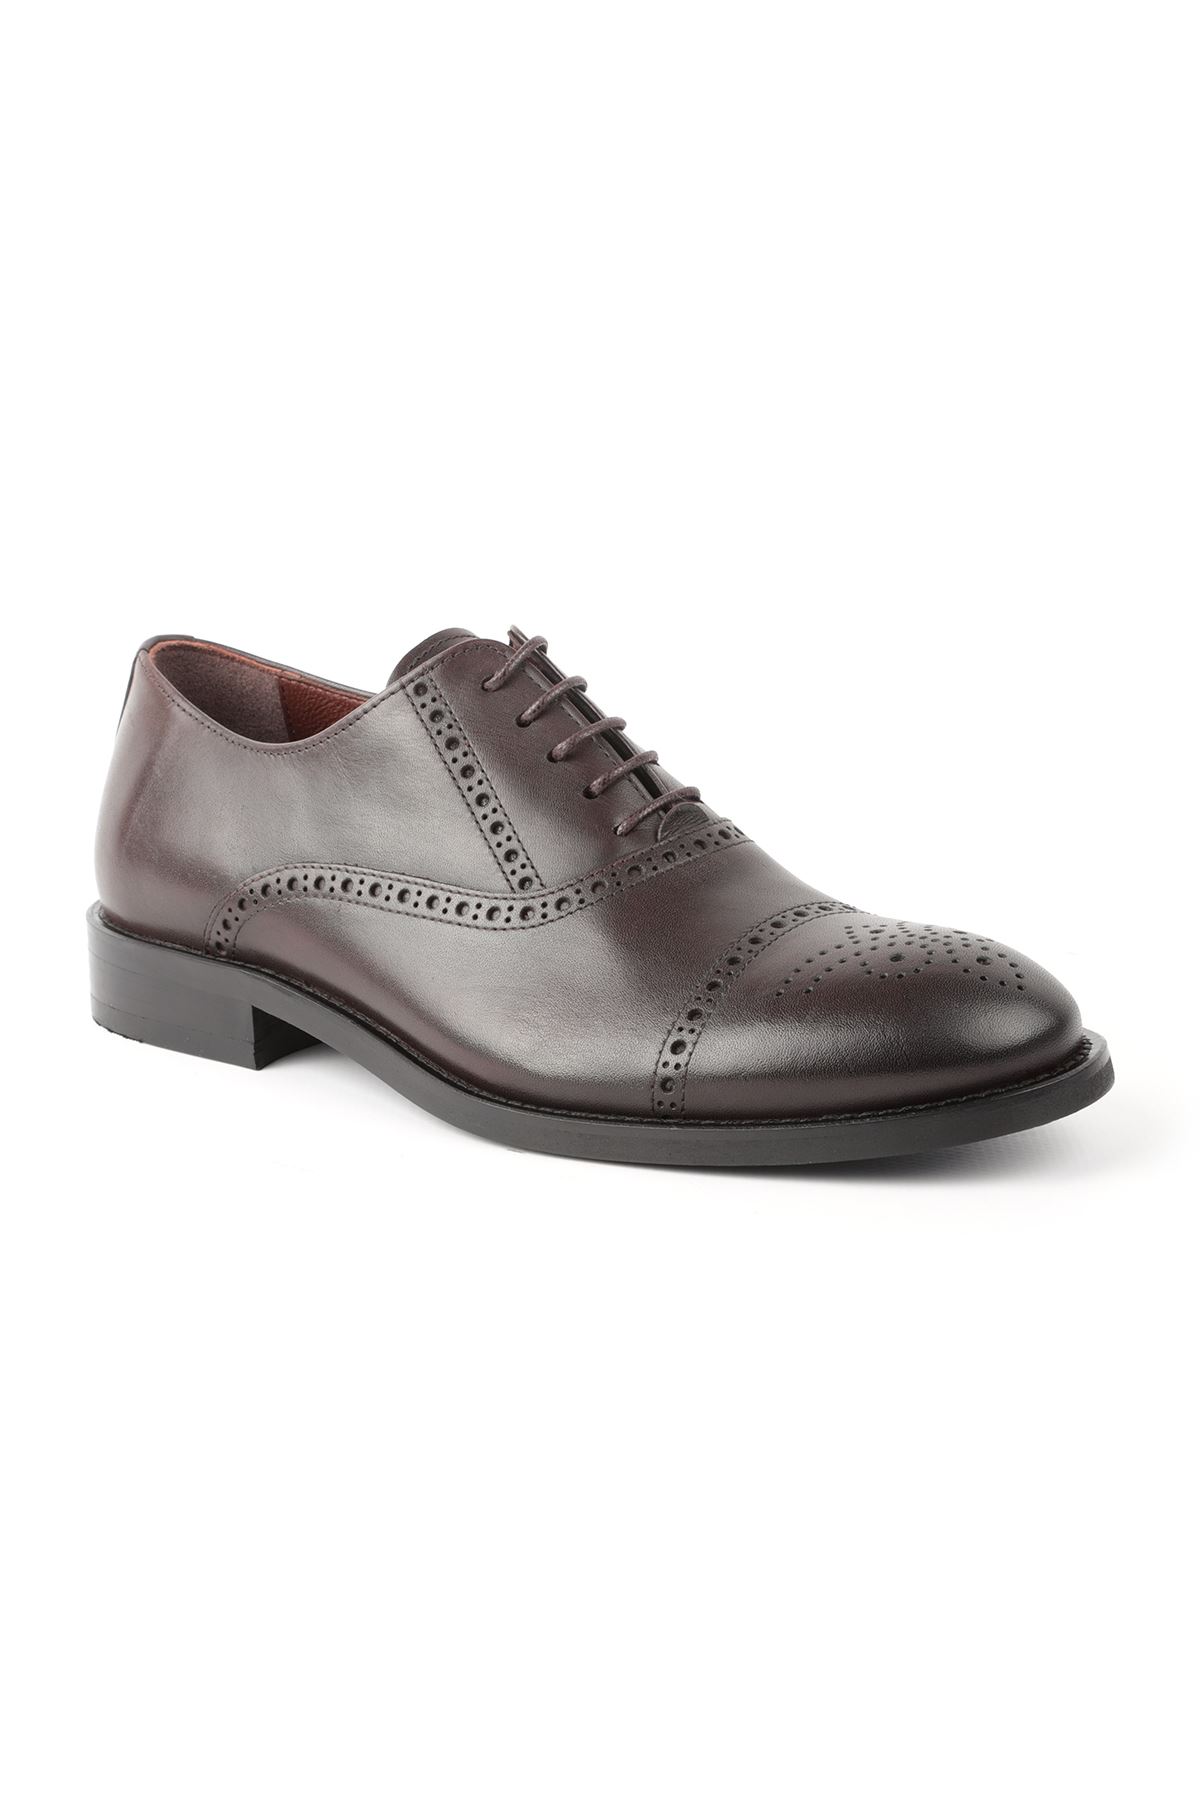 Libero L3698 Brown Classic Men's Shoes